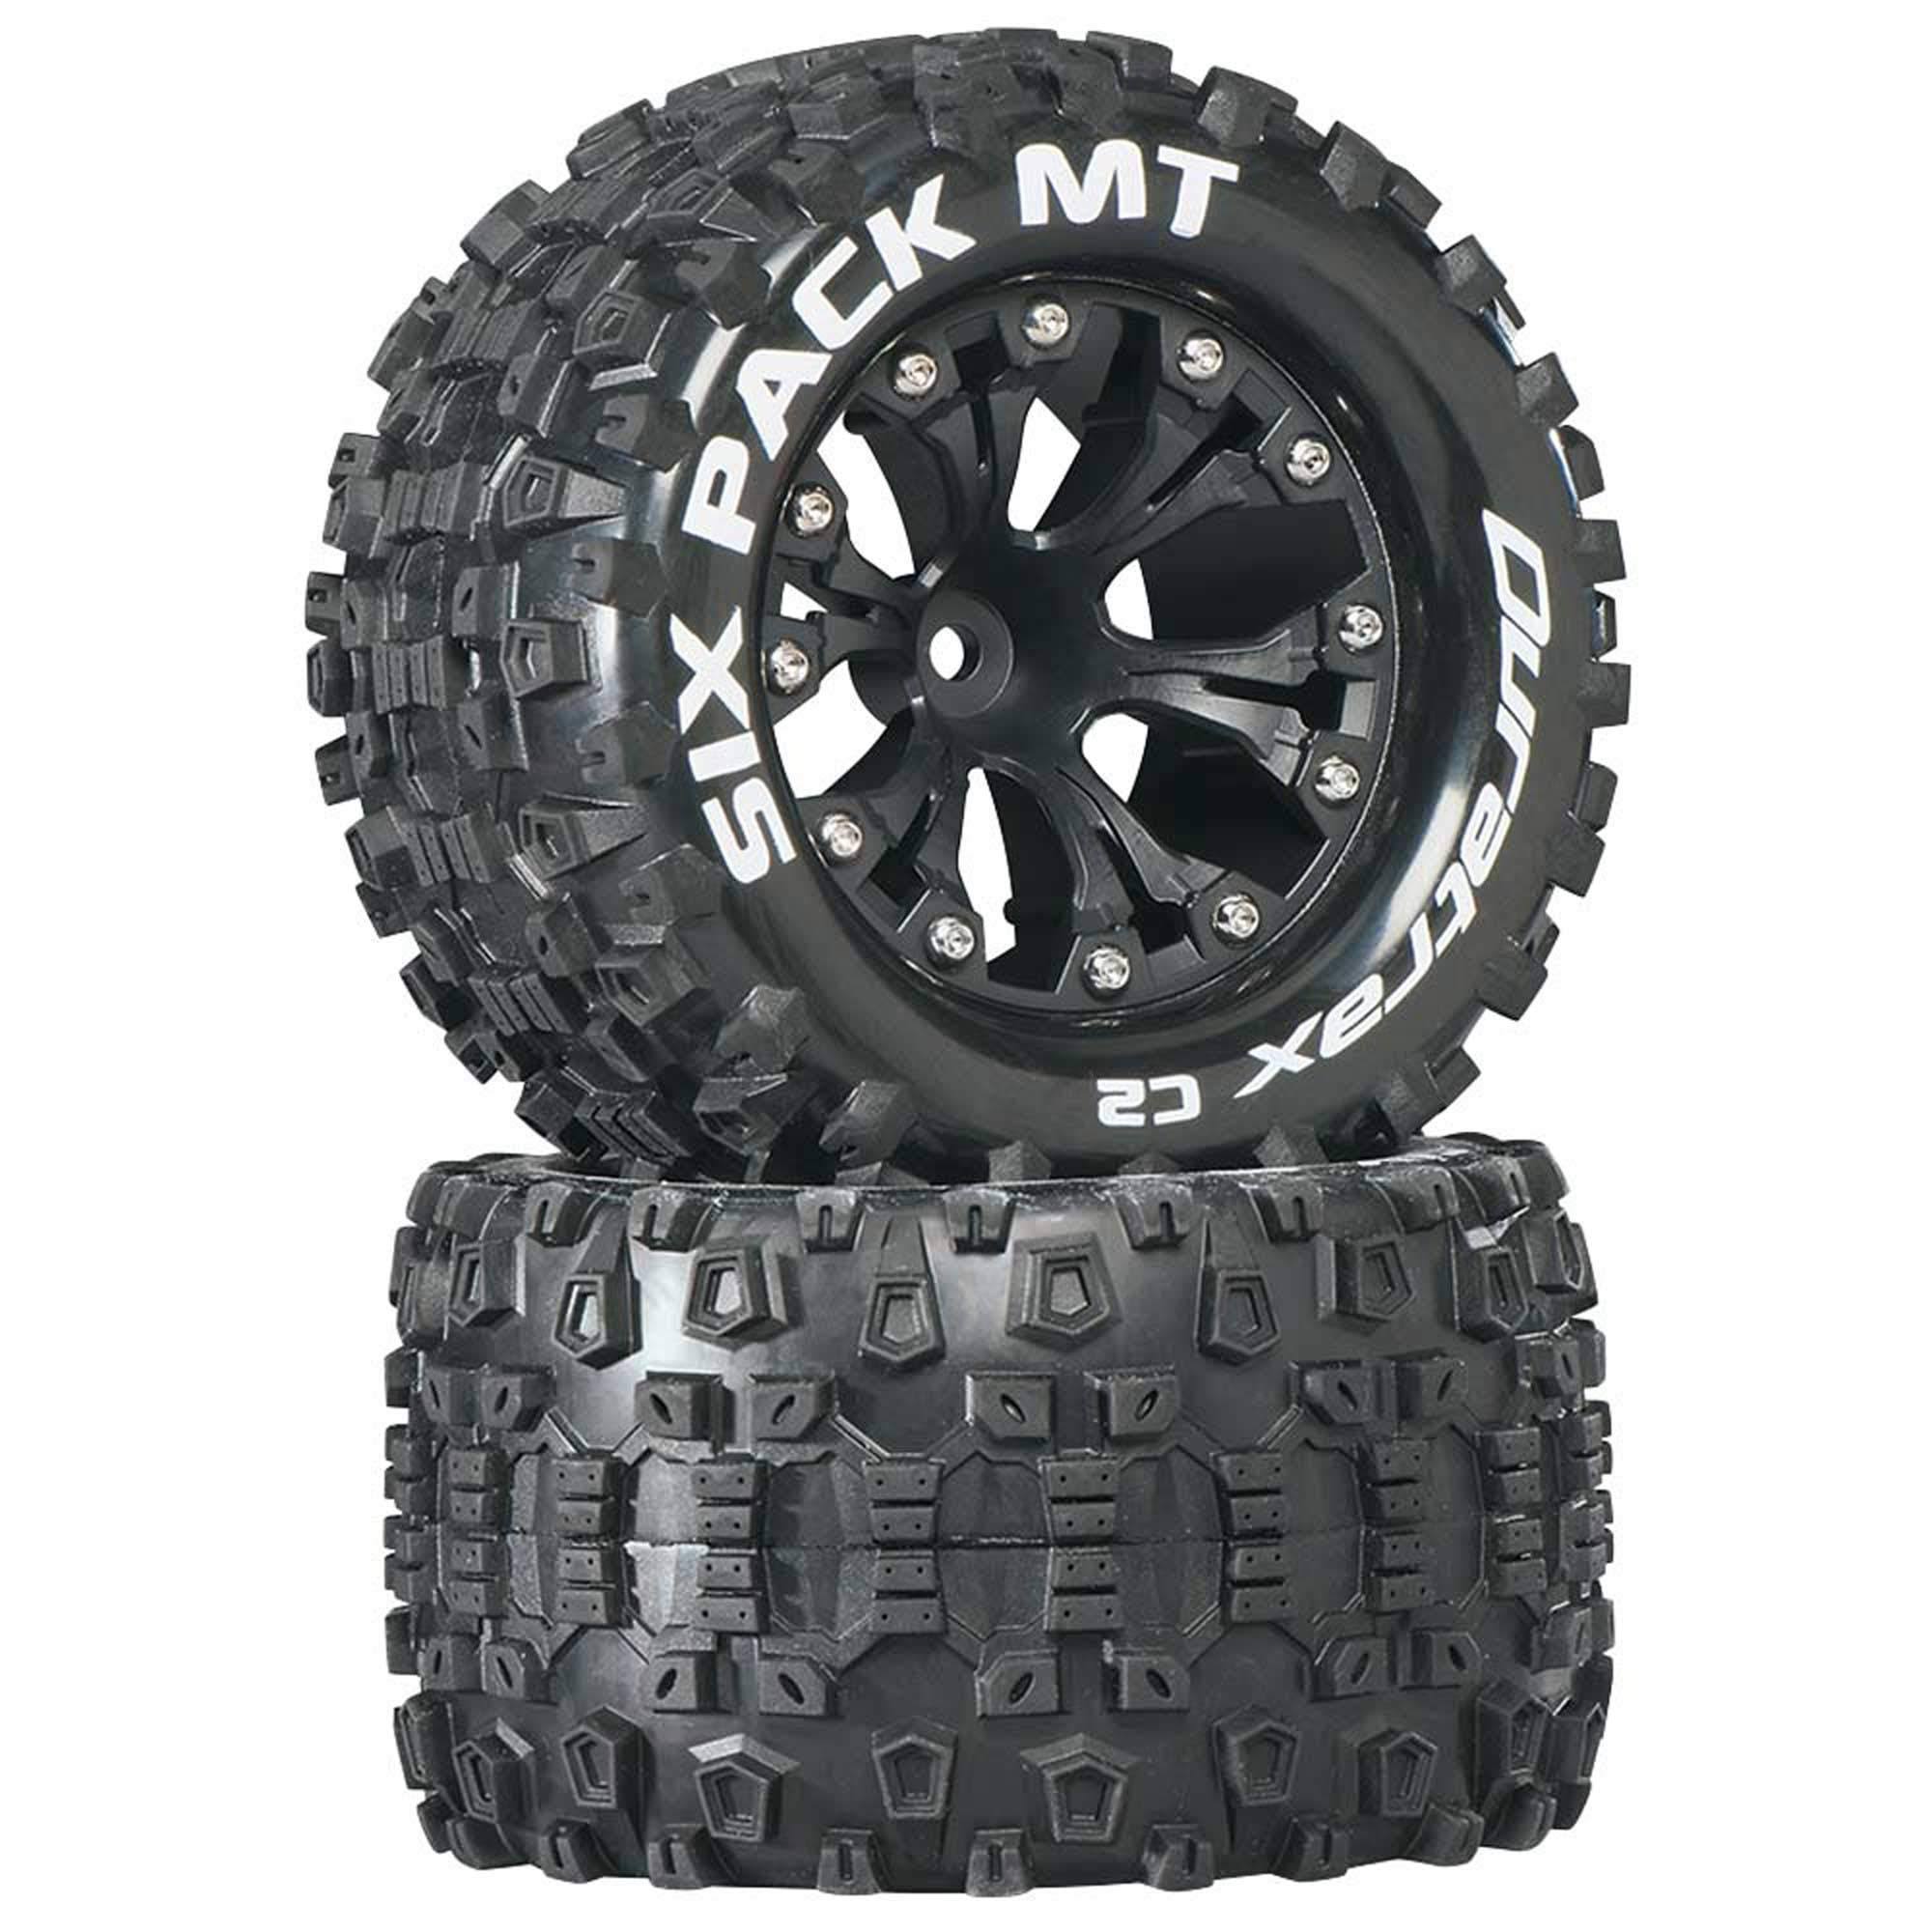 Duratrax Sixpack MT 2.8 Truck 2WD Mounted C2 Tires - Black